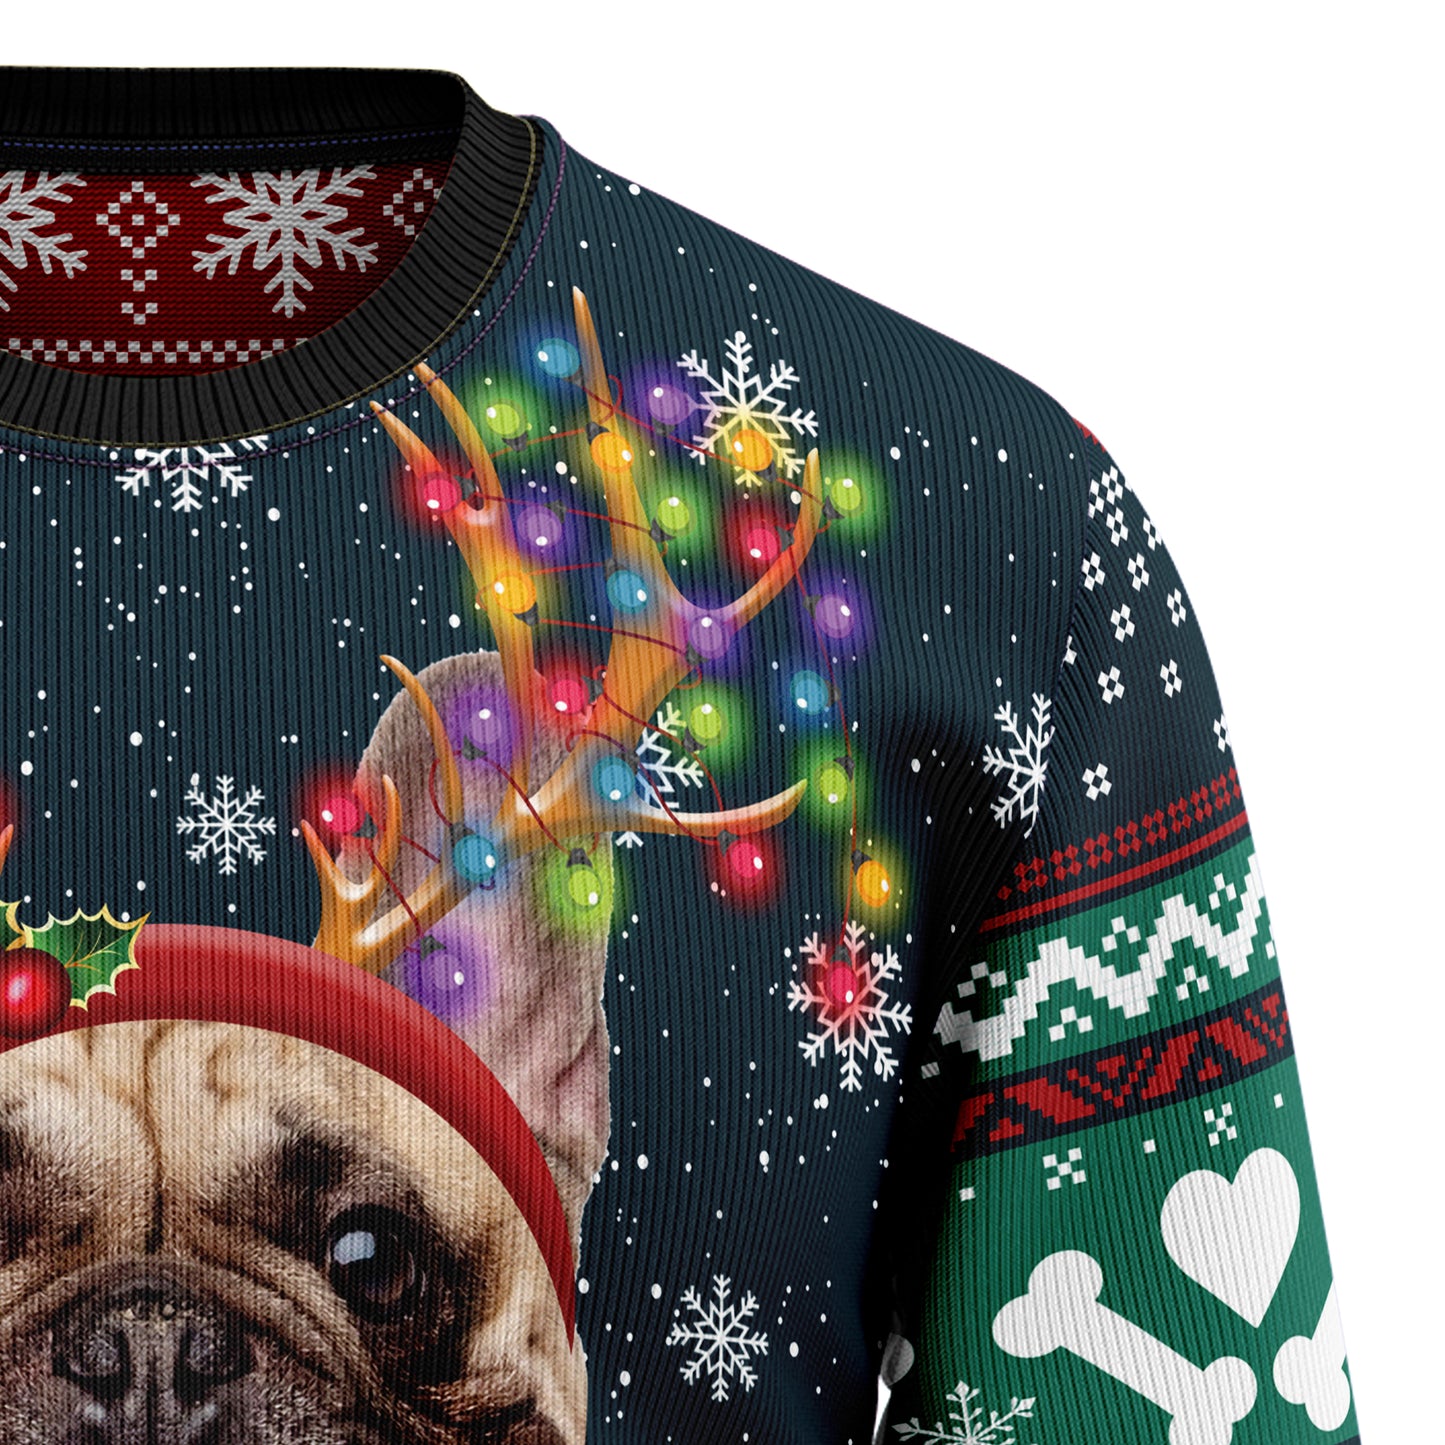 Cool French Bulldog TG51027 Ugly Christmas Sweater